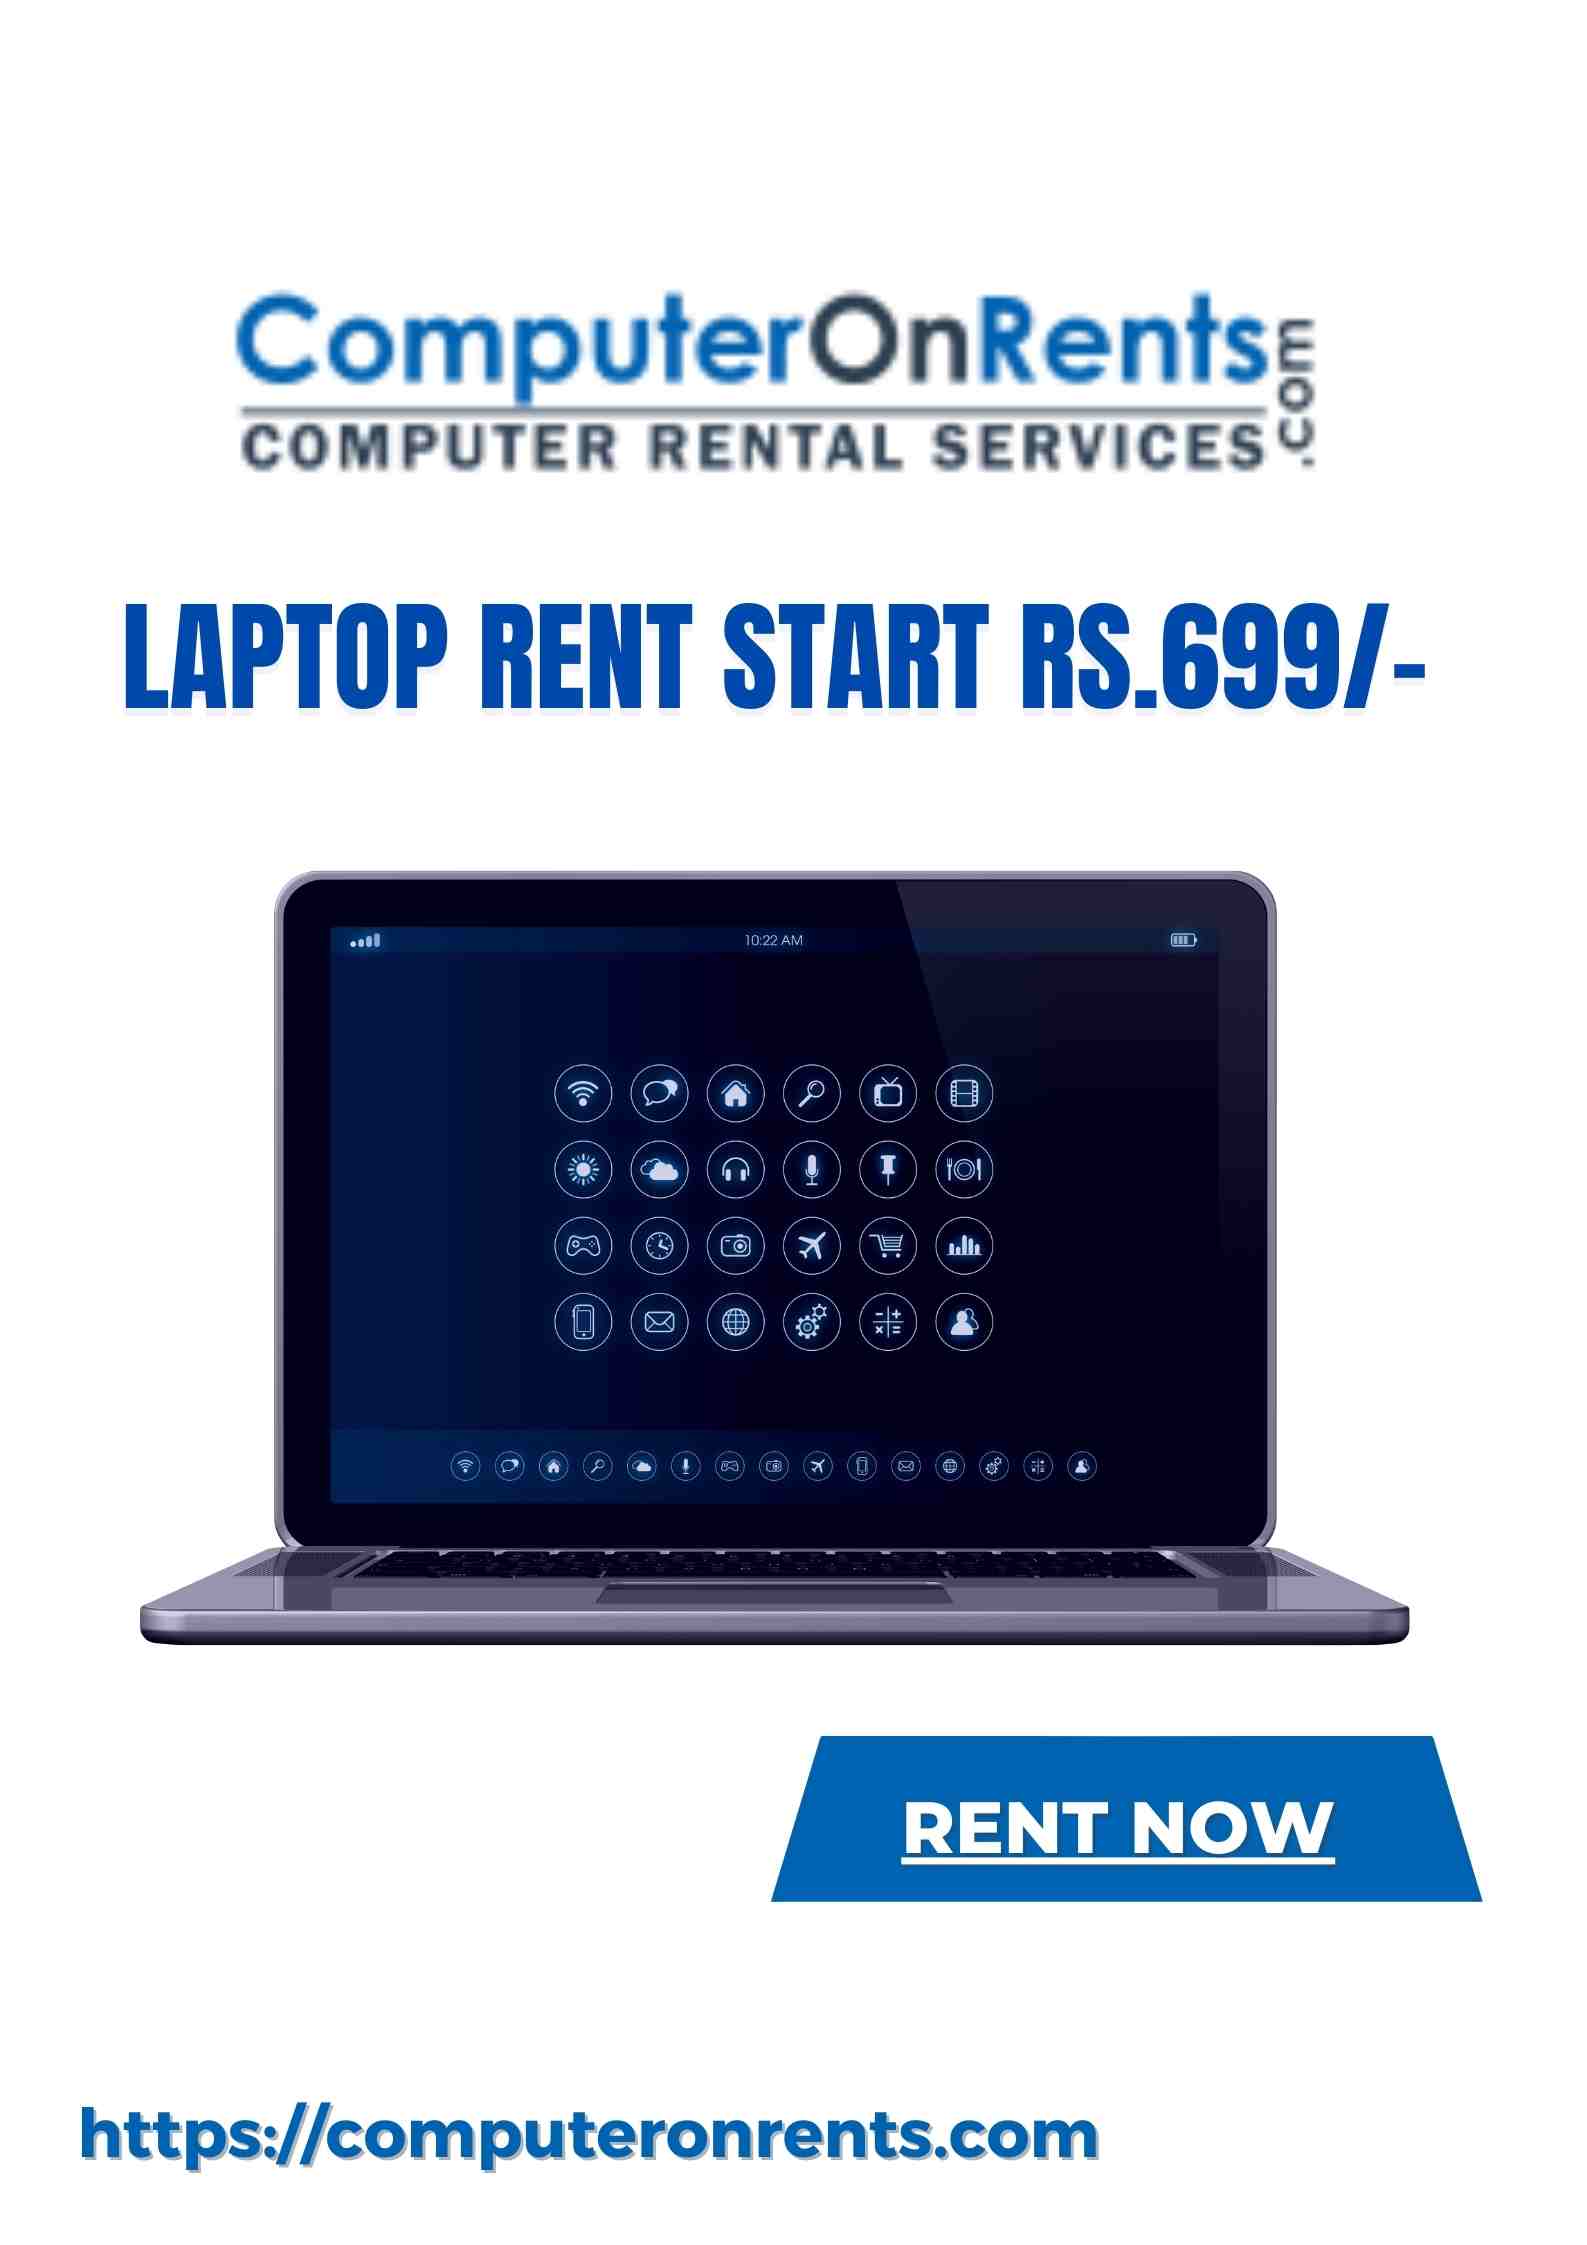 Laptop on rent price start at Rs.699 Mumbai -computeronrents.comComputers and MobilesLaptopsAll Indiaother